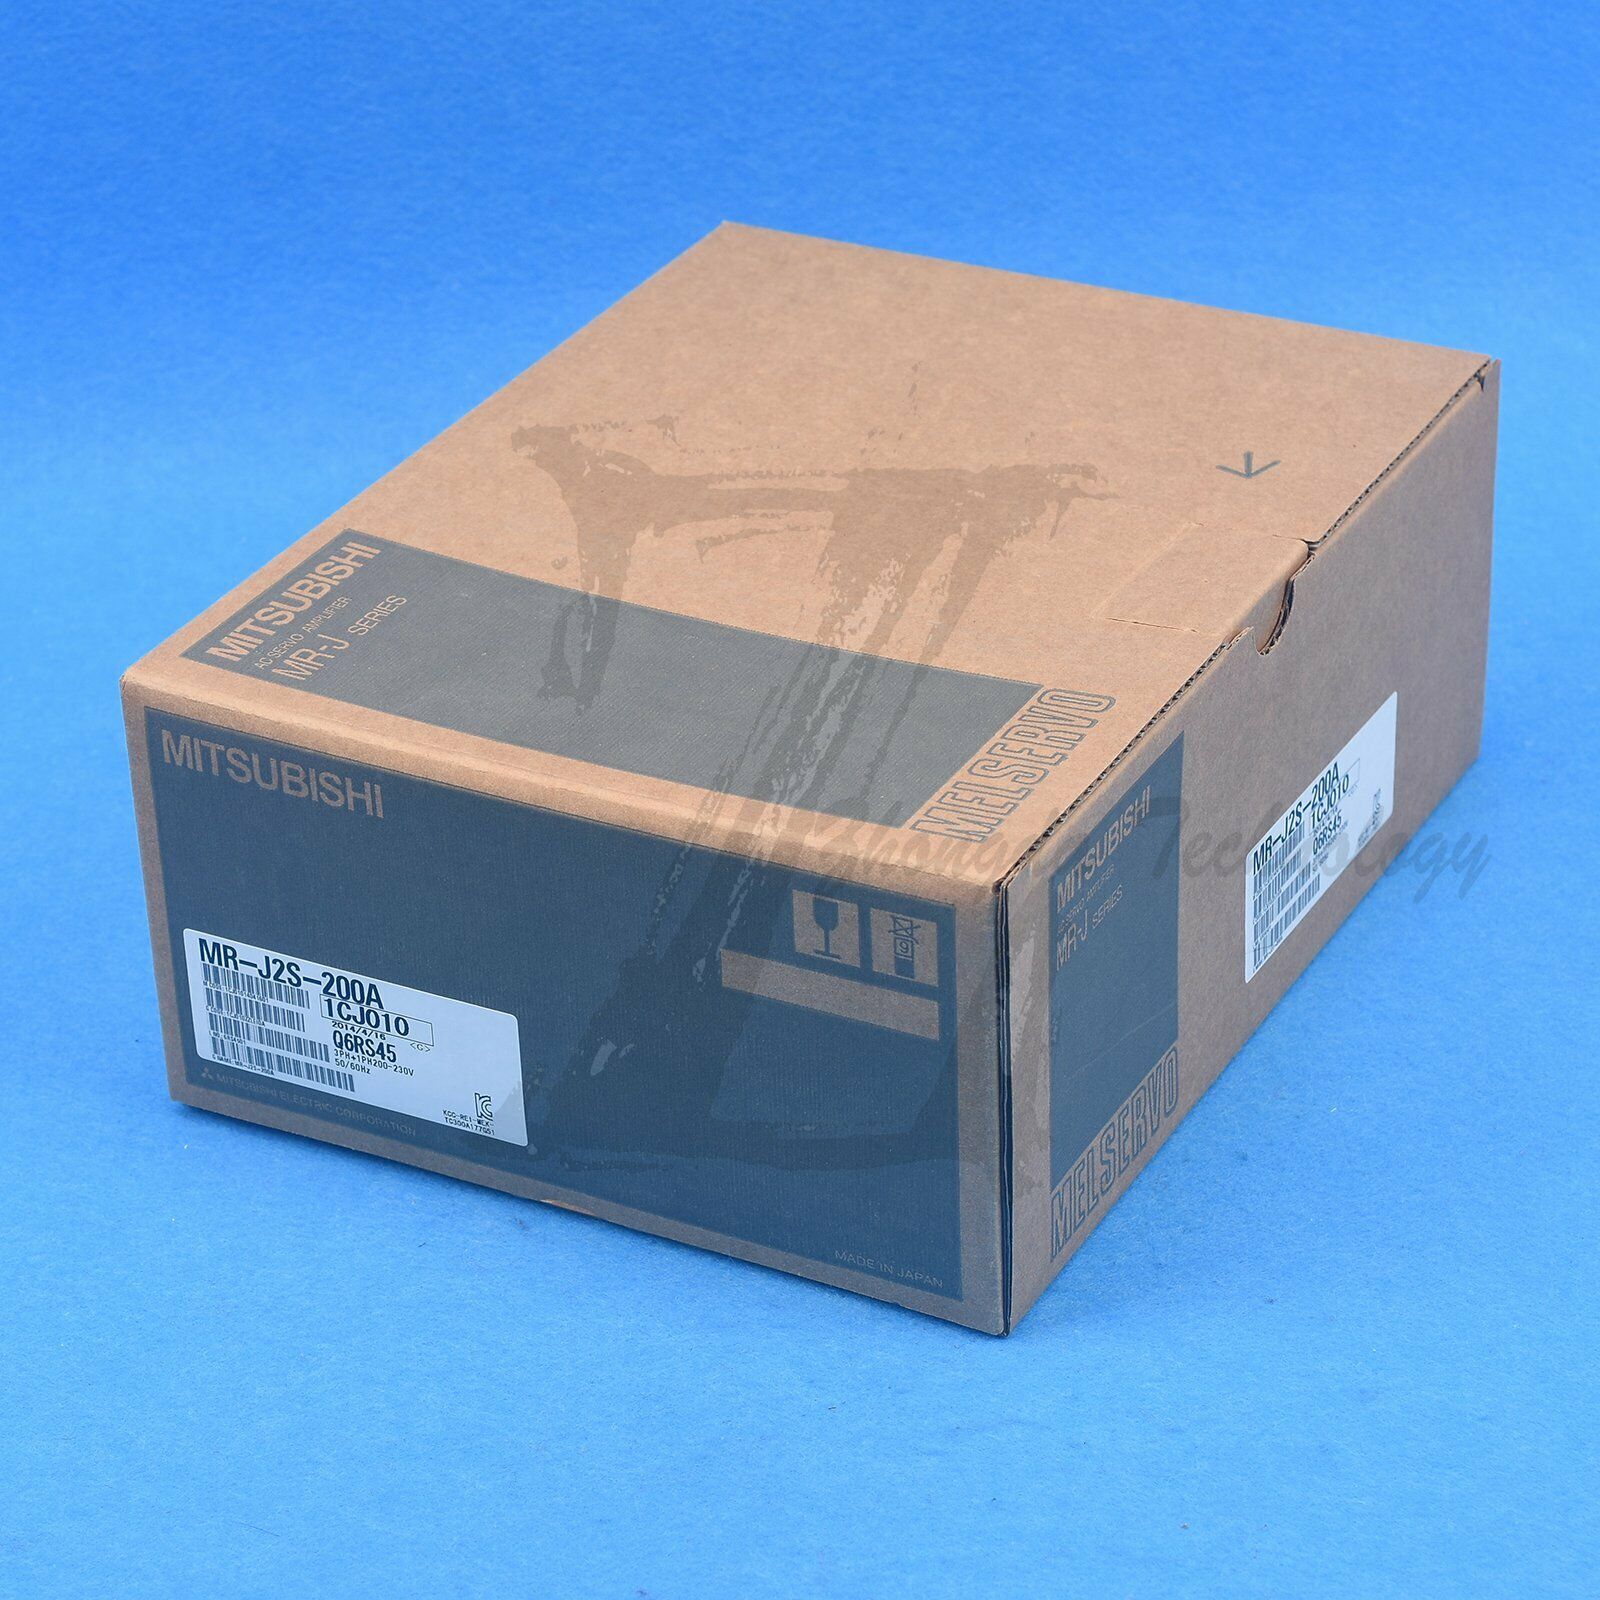 NEW Mitsubishi AC Servo Amplifier MR-J2S-200A Quality assurance